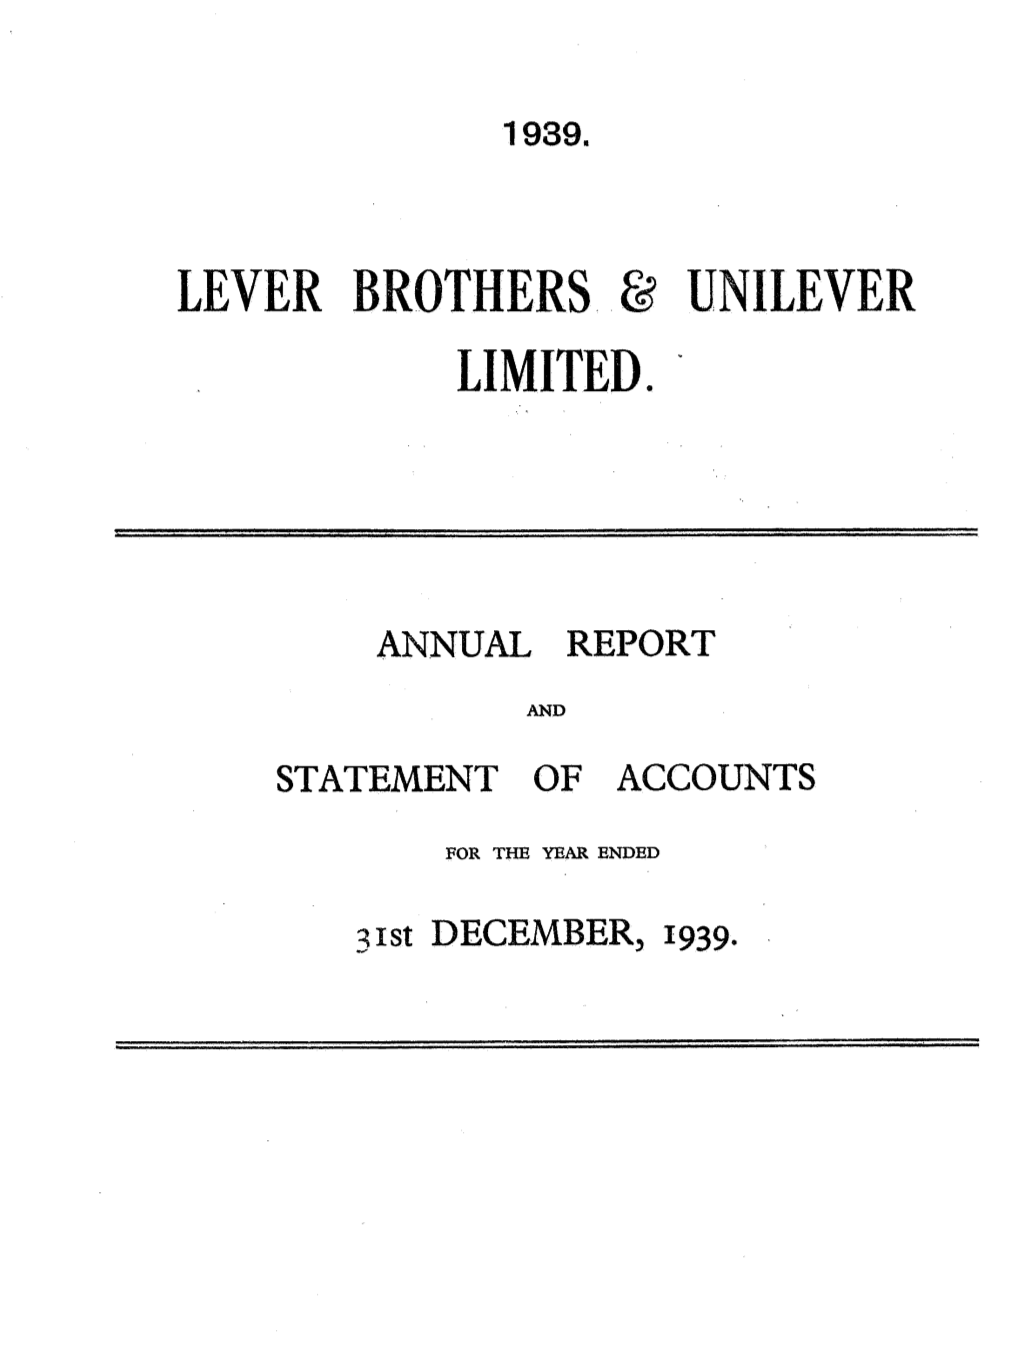 1939 Annual Report